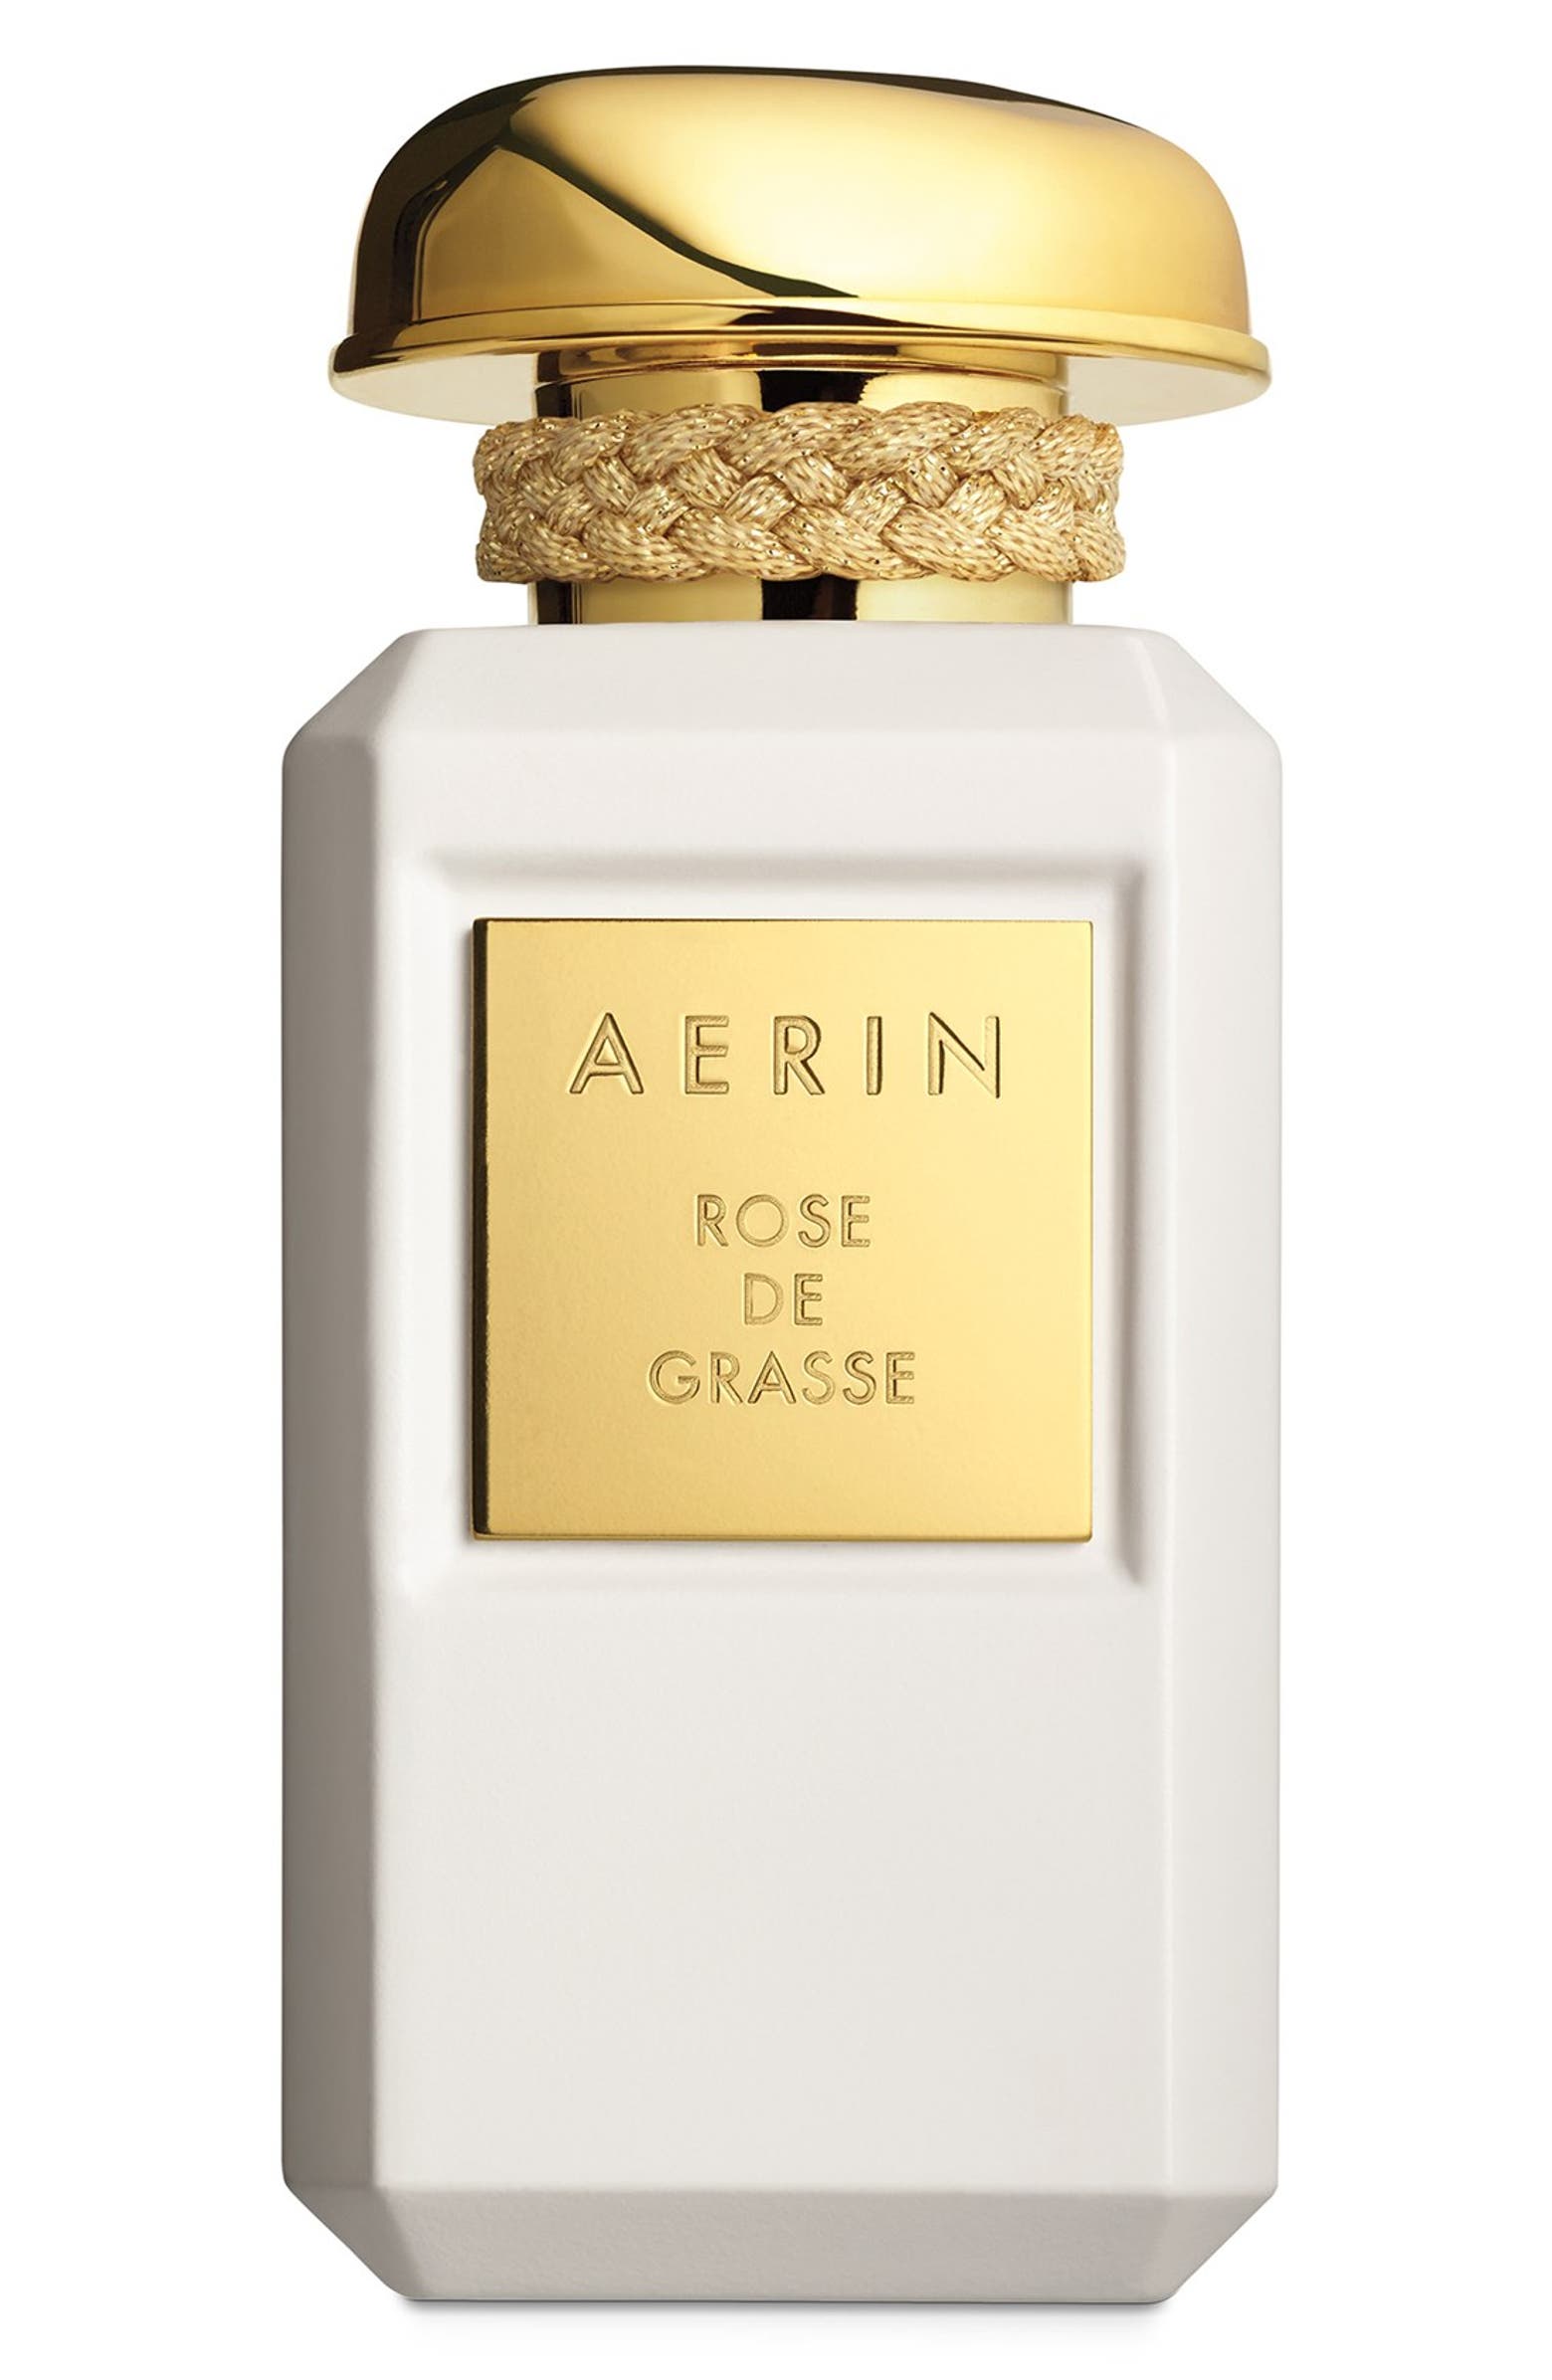 AERIN Beauty Rose de Grasse Parfum